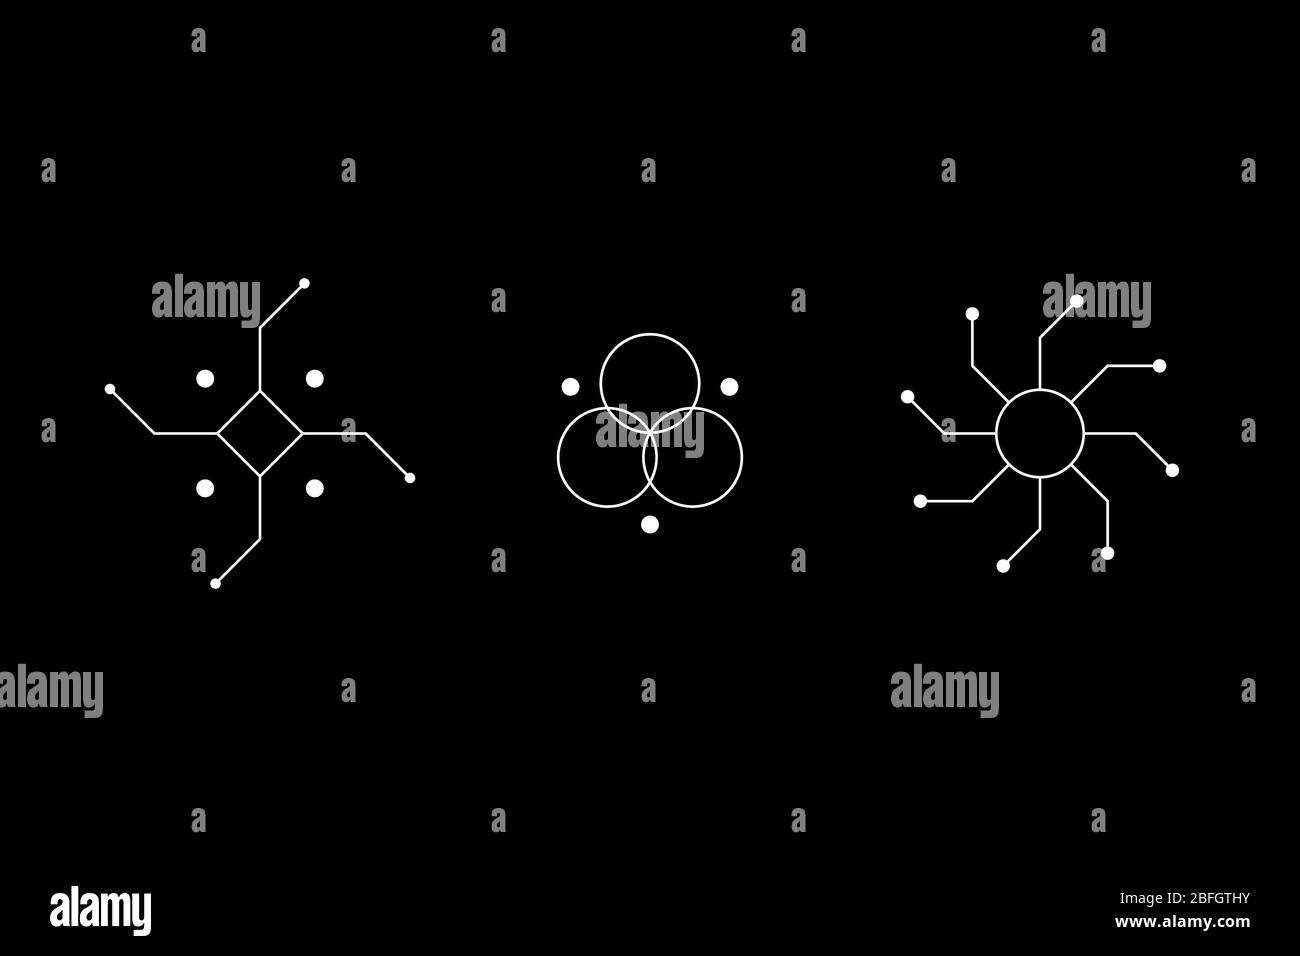 Magische Geometrie weiß verschiedene Symbol-Set. Kreis, Quadrat, Rauten Figuren. UFO-Zeichen. Design-Symbole für Puzzle, Logik, metroidvania Spiele. Vektorgrafik. Stock Vektor